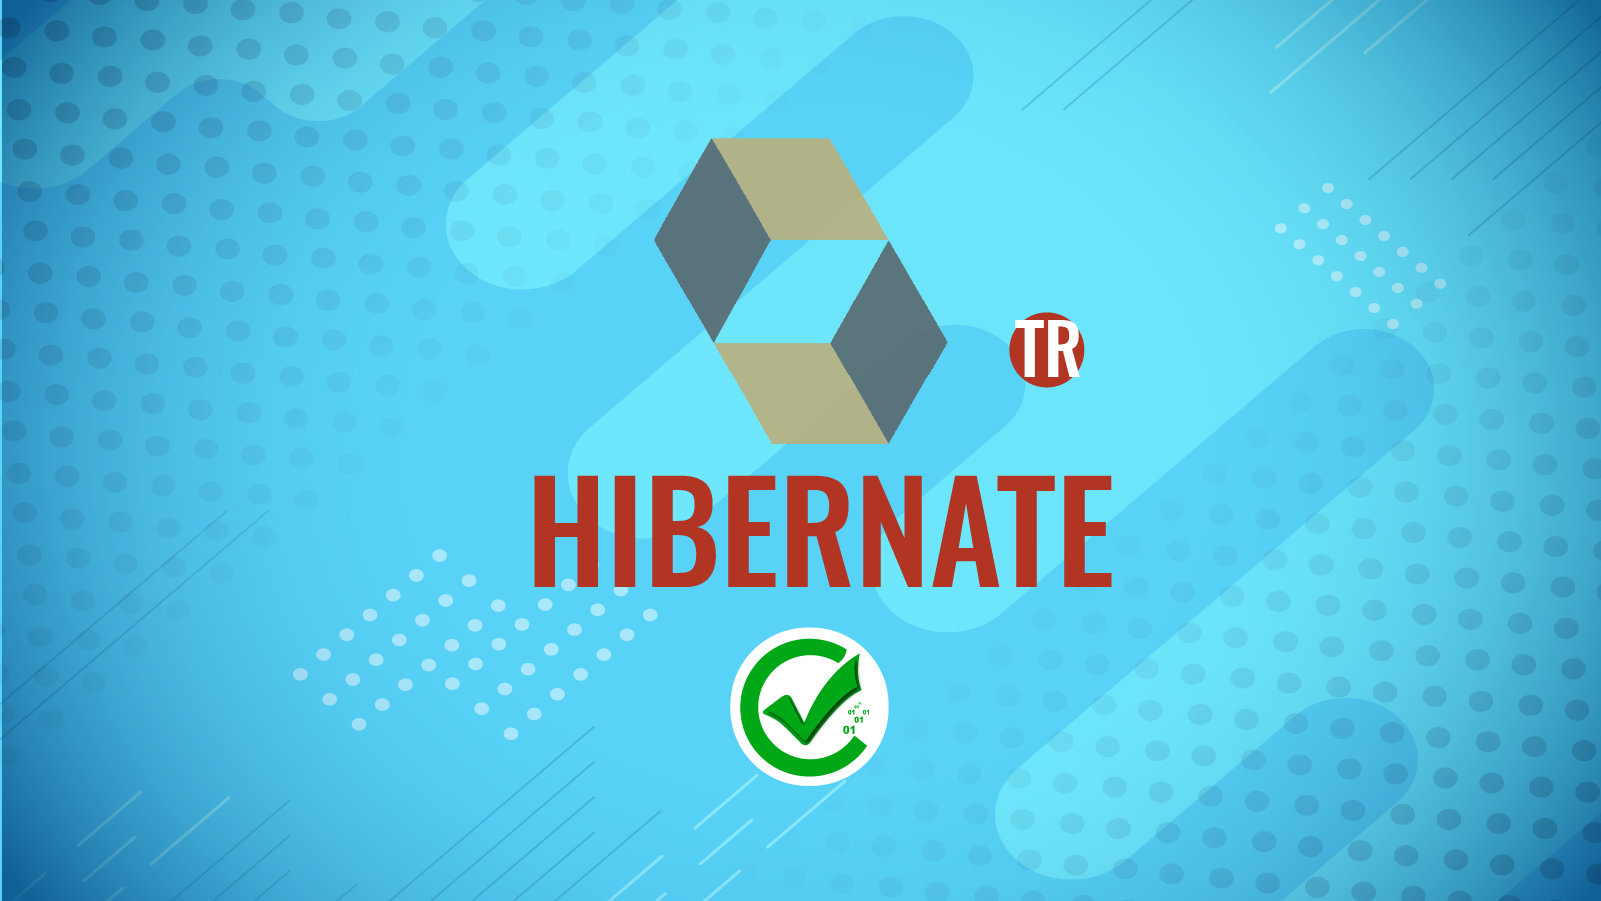 Hibernate192..194/195